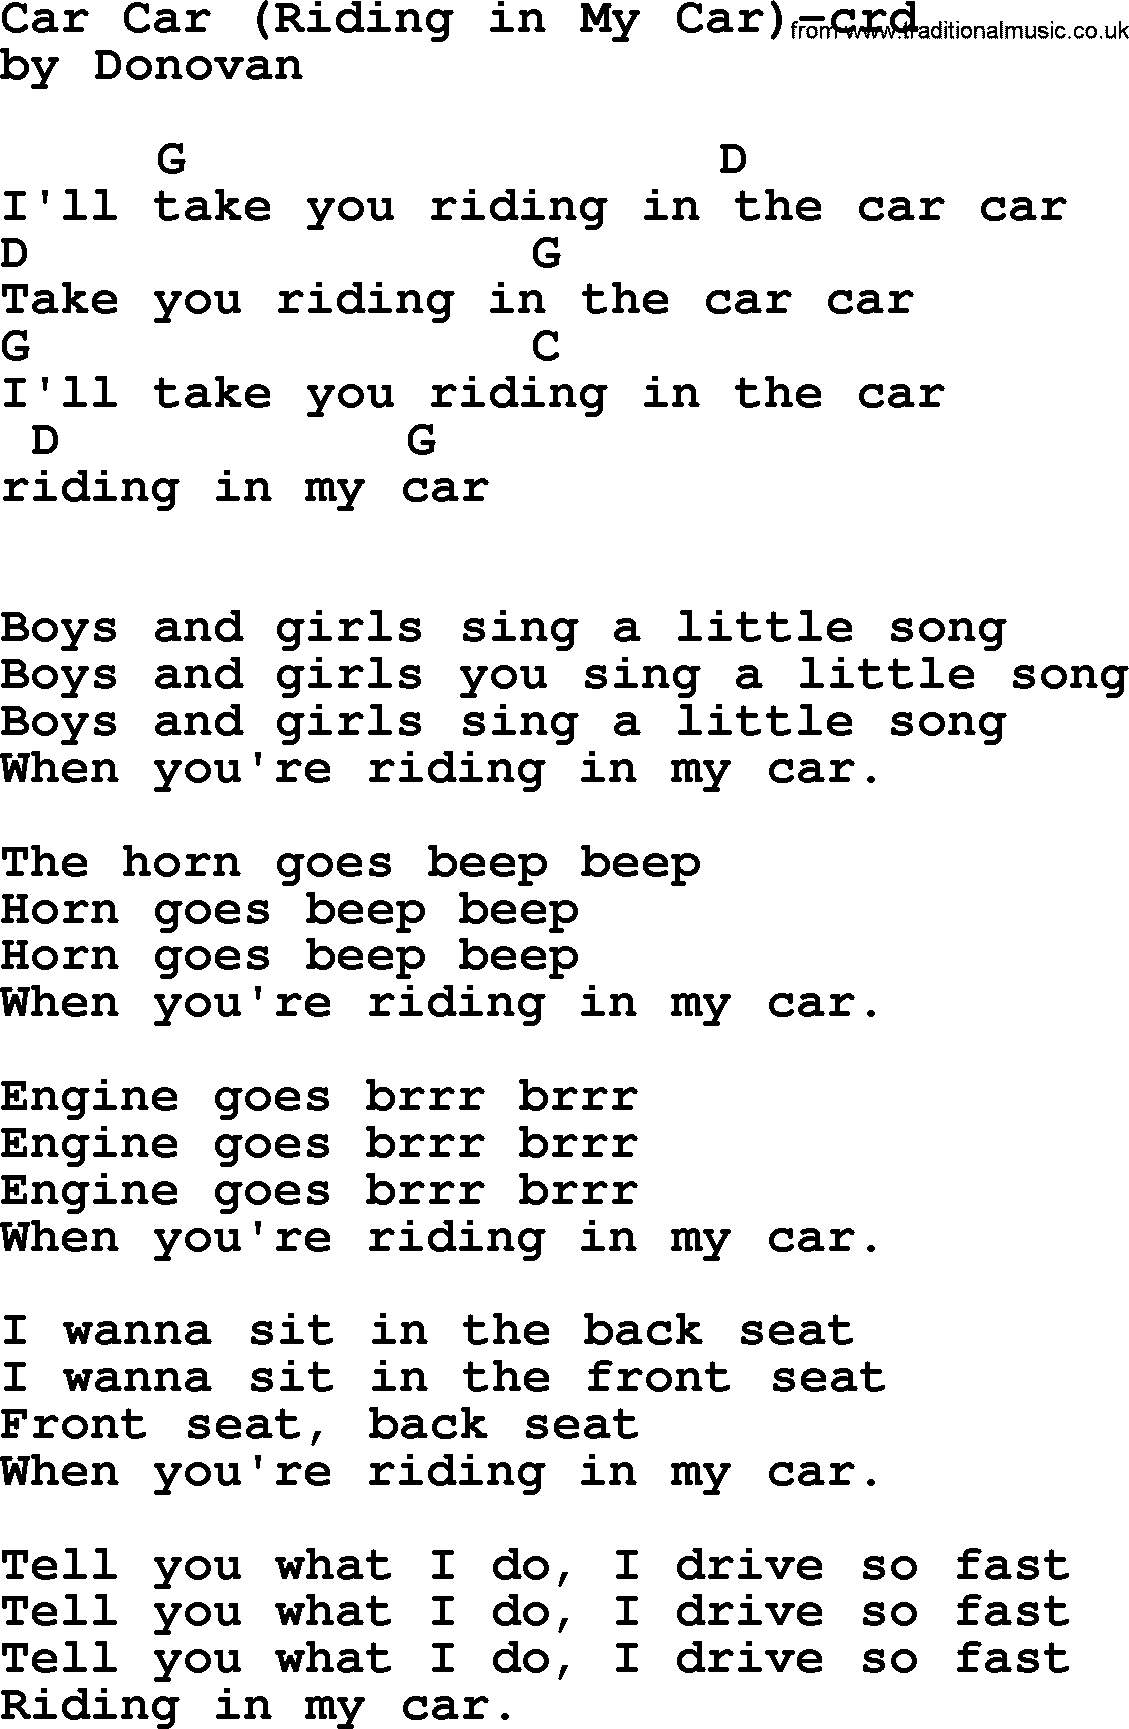 Fast Car Chords Donovan Leitch Song Car Car Lyrics And Chords